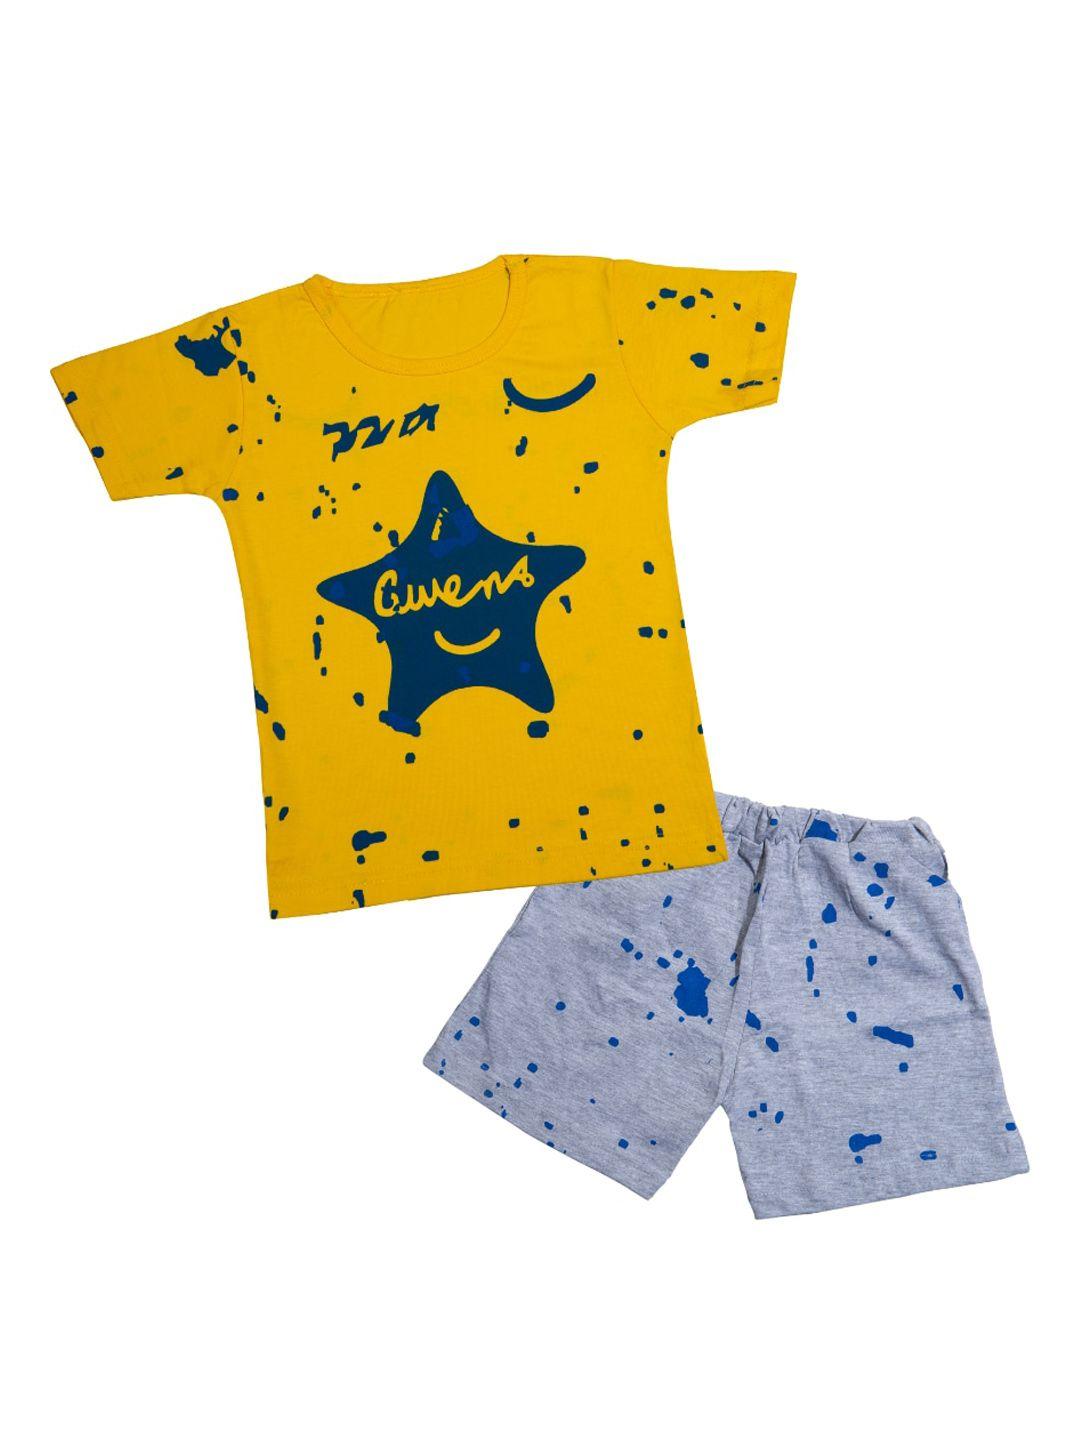 CATCUB Unisex Kids Yellow Clothing Set